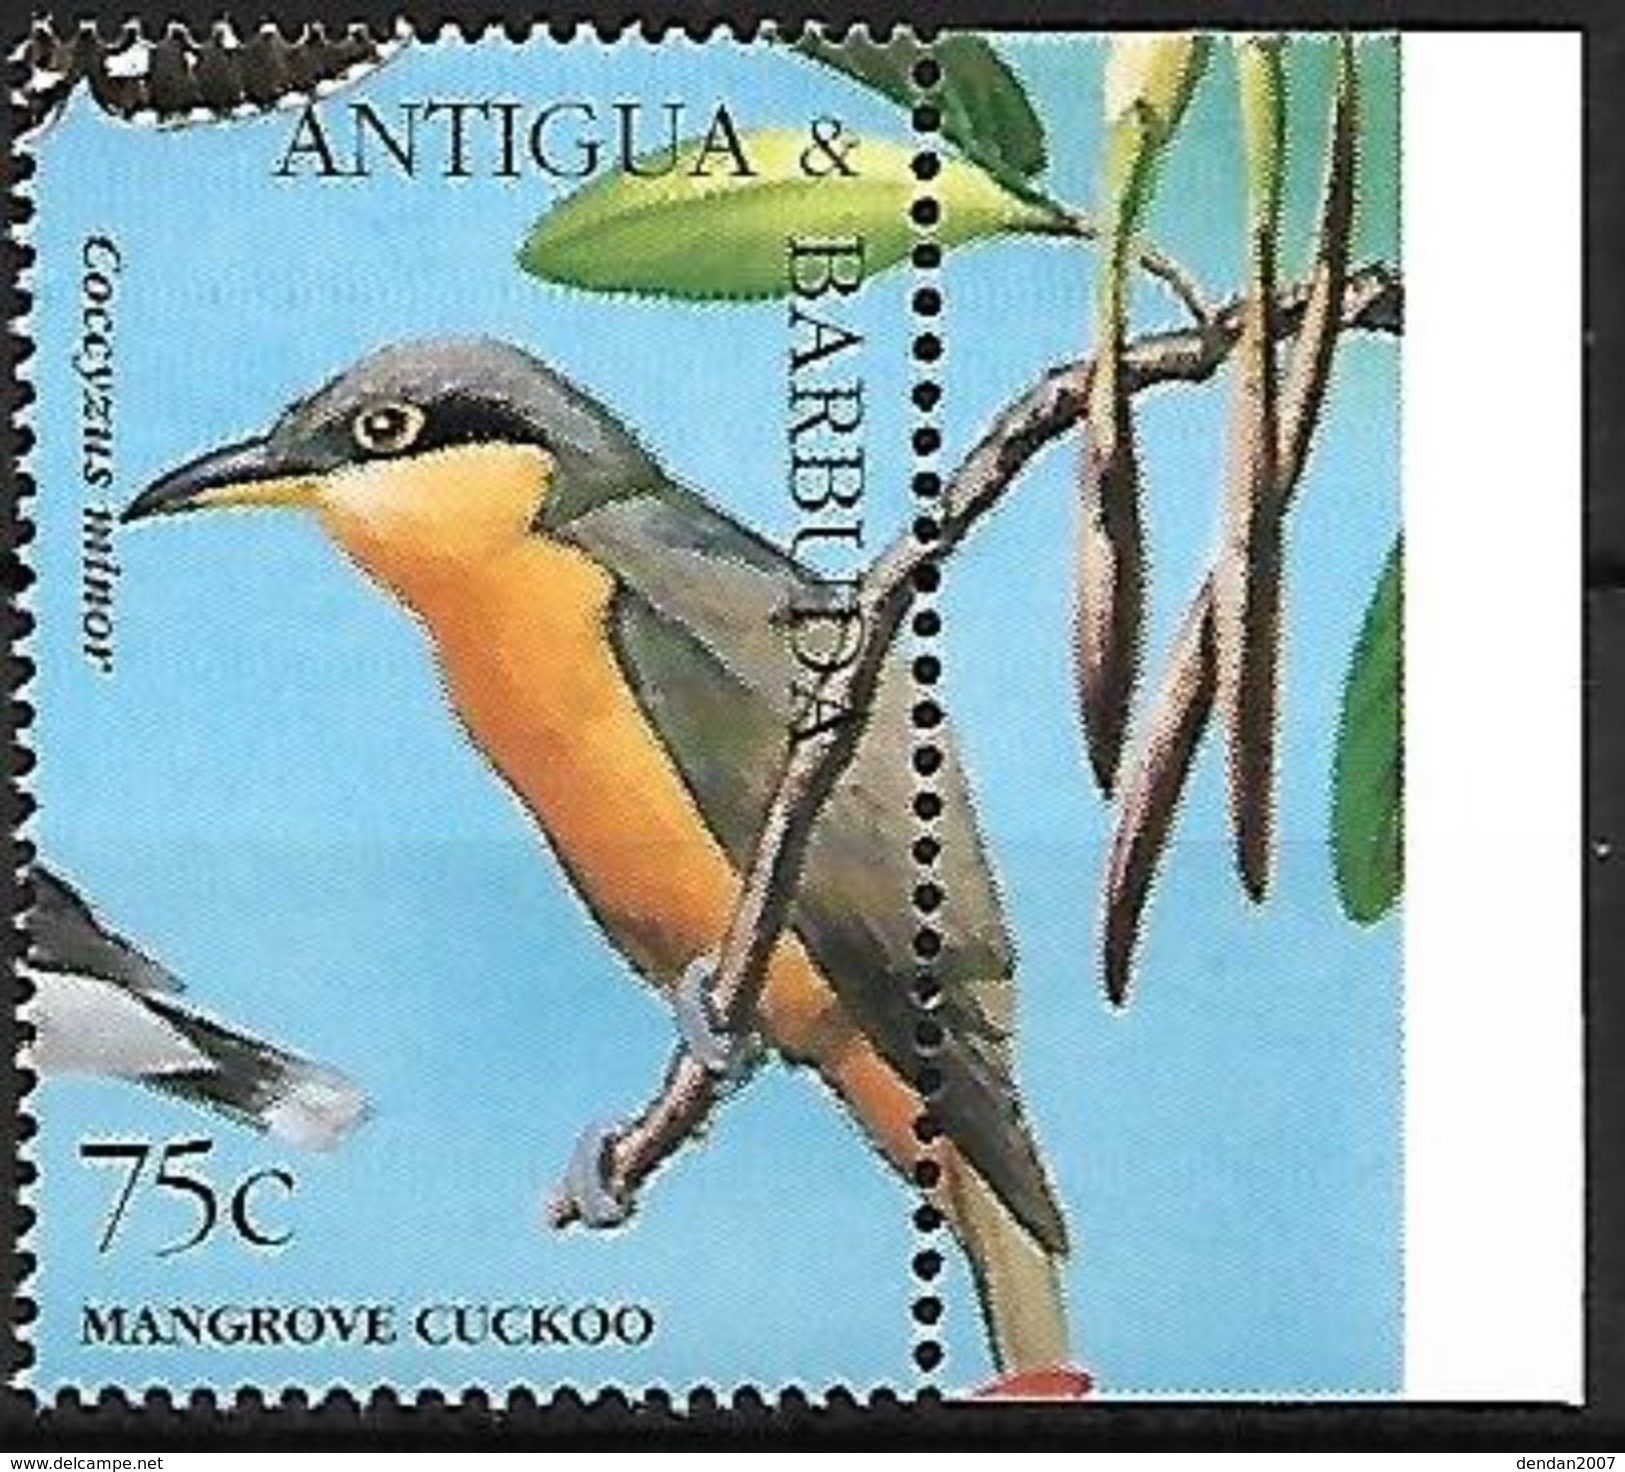 Antigua & Barbuda - 1995 - MNH - Mangove Cuckoo (Coccyzus Minor) - Cuckoos & Turacos